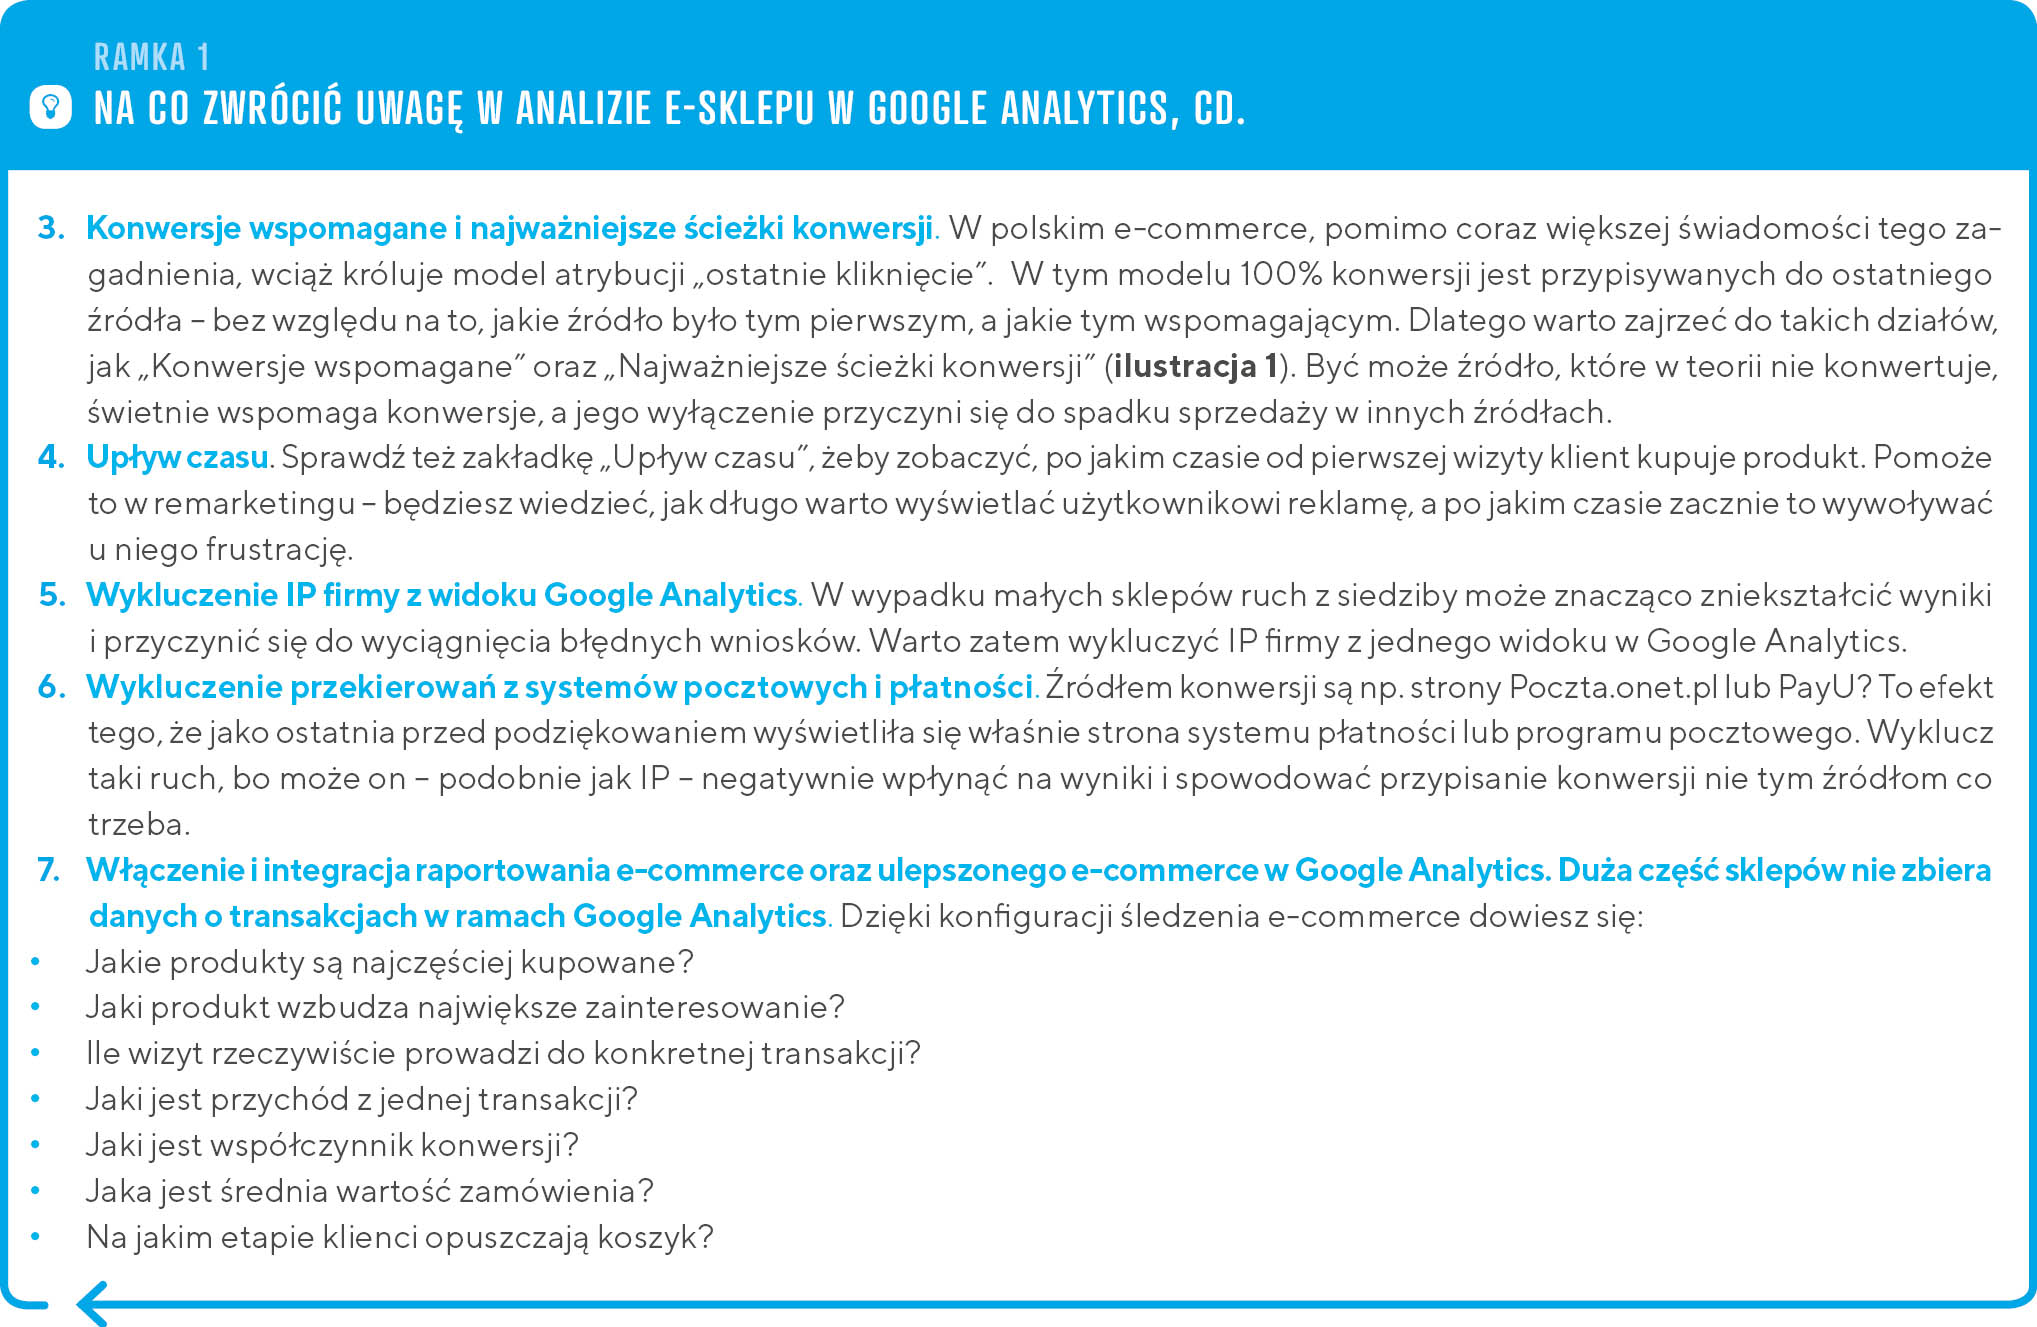 Ramka: Analiza e-sklepu w Google Analitics cz.2